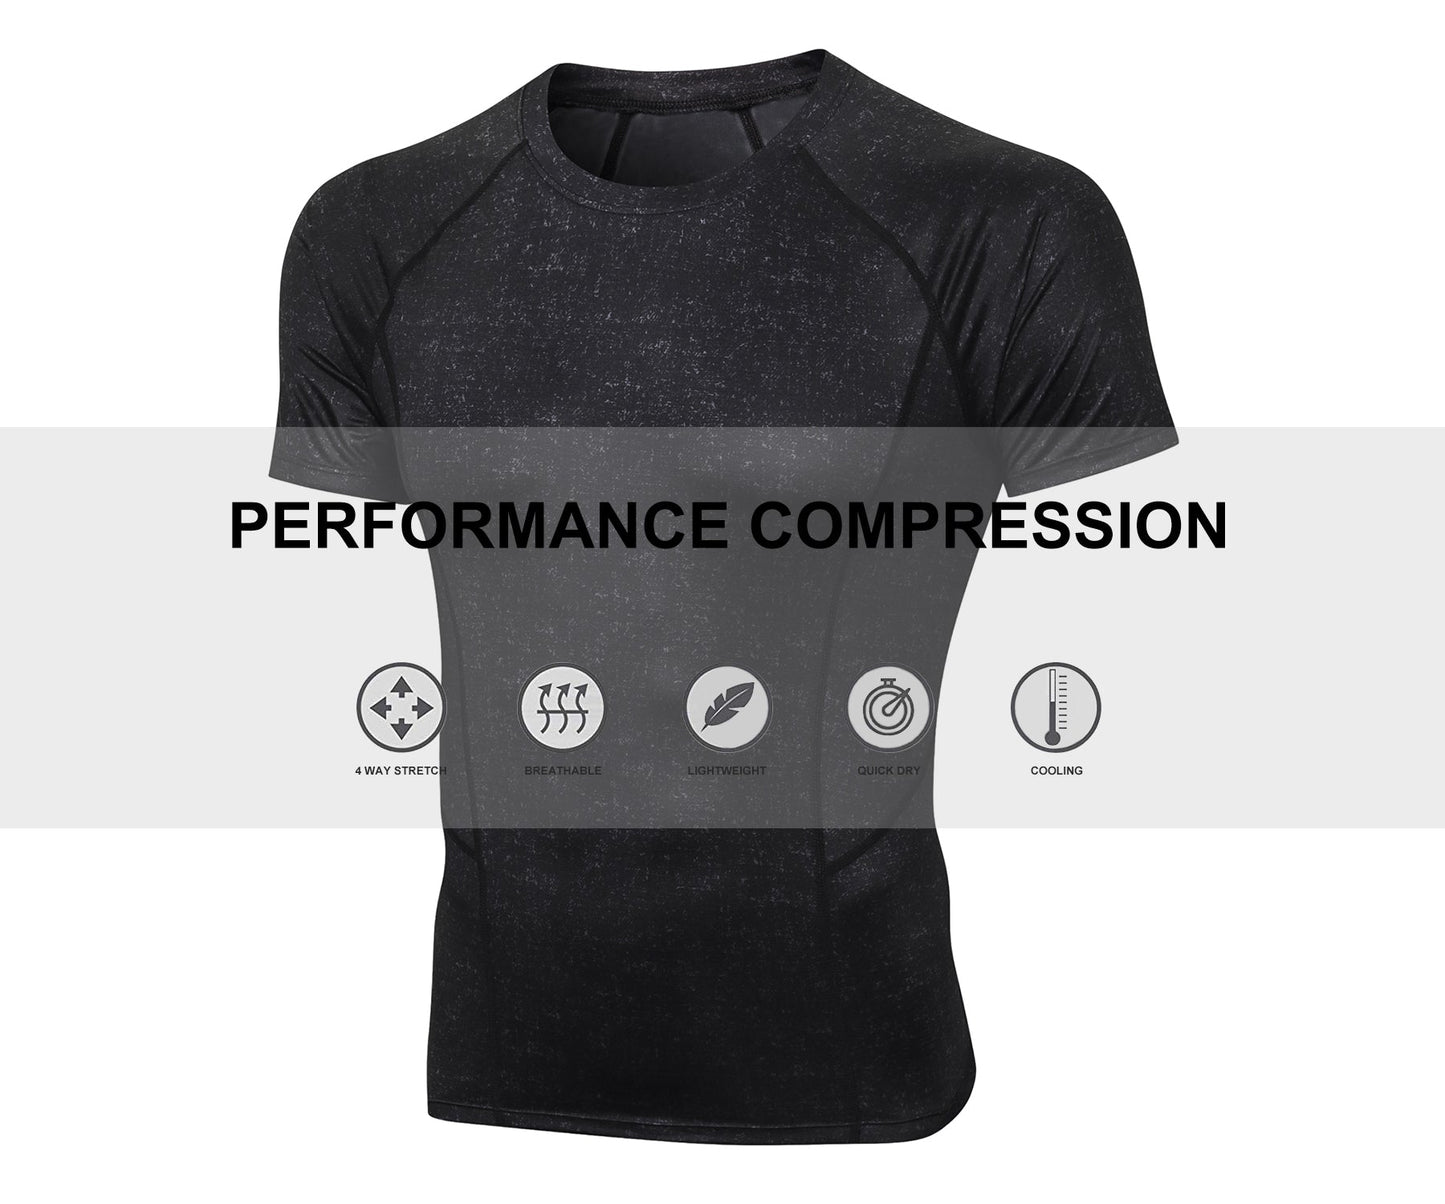 Men Compression Undershirt Quick Dry Stretchy Soft Lightweight Workout Running Base Layer LANBAOSI